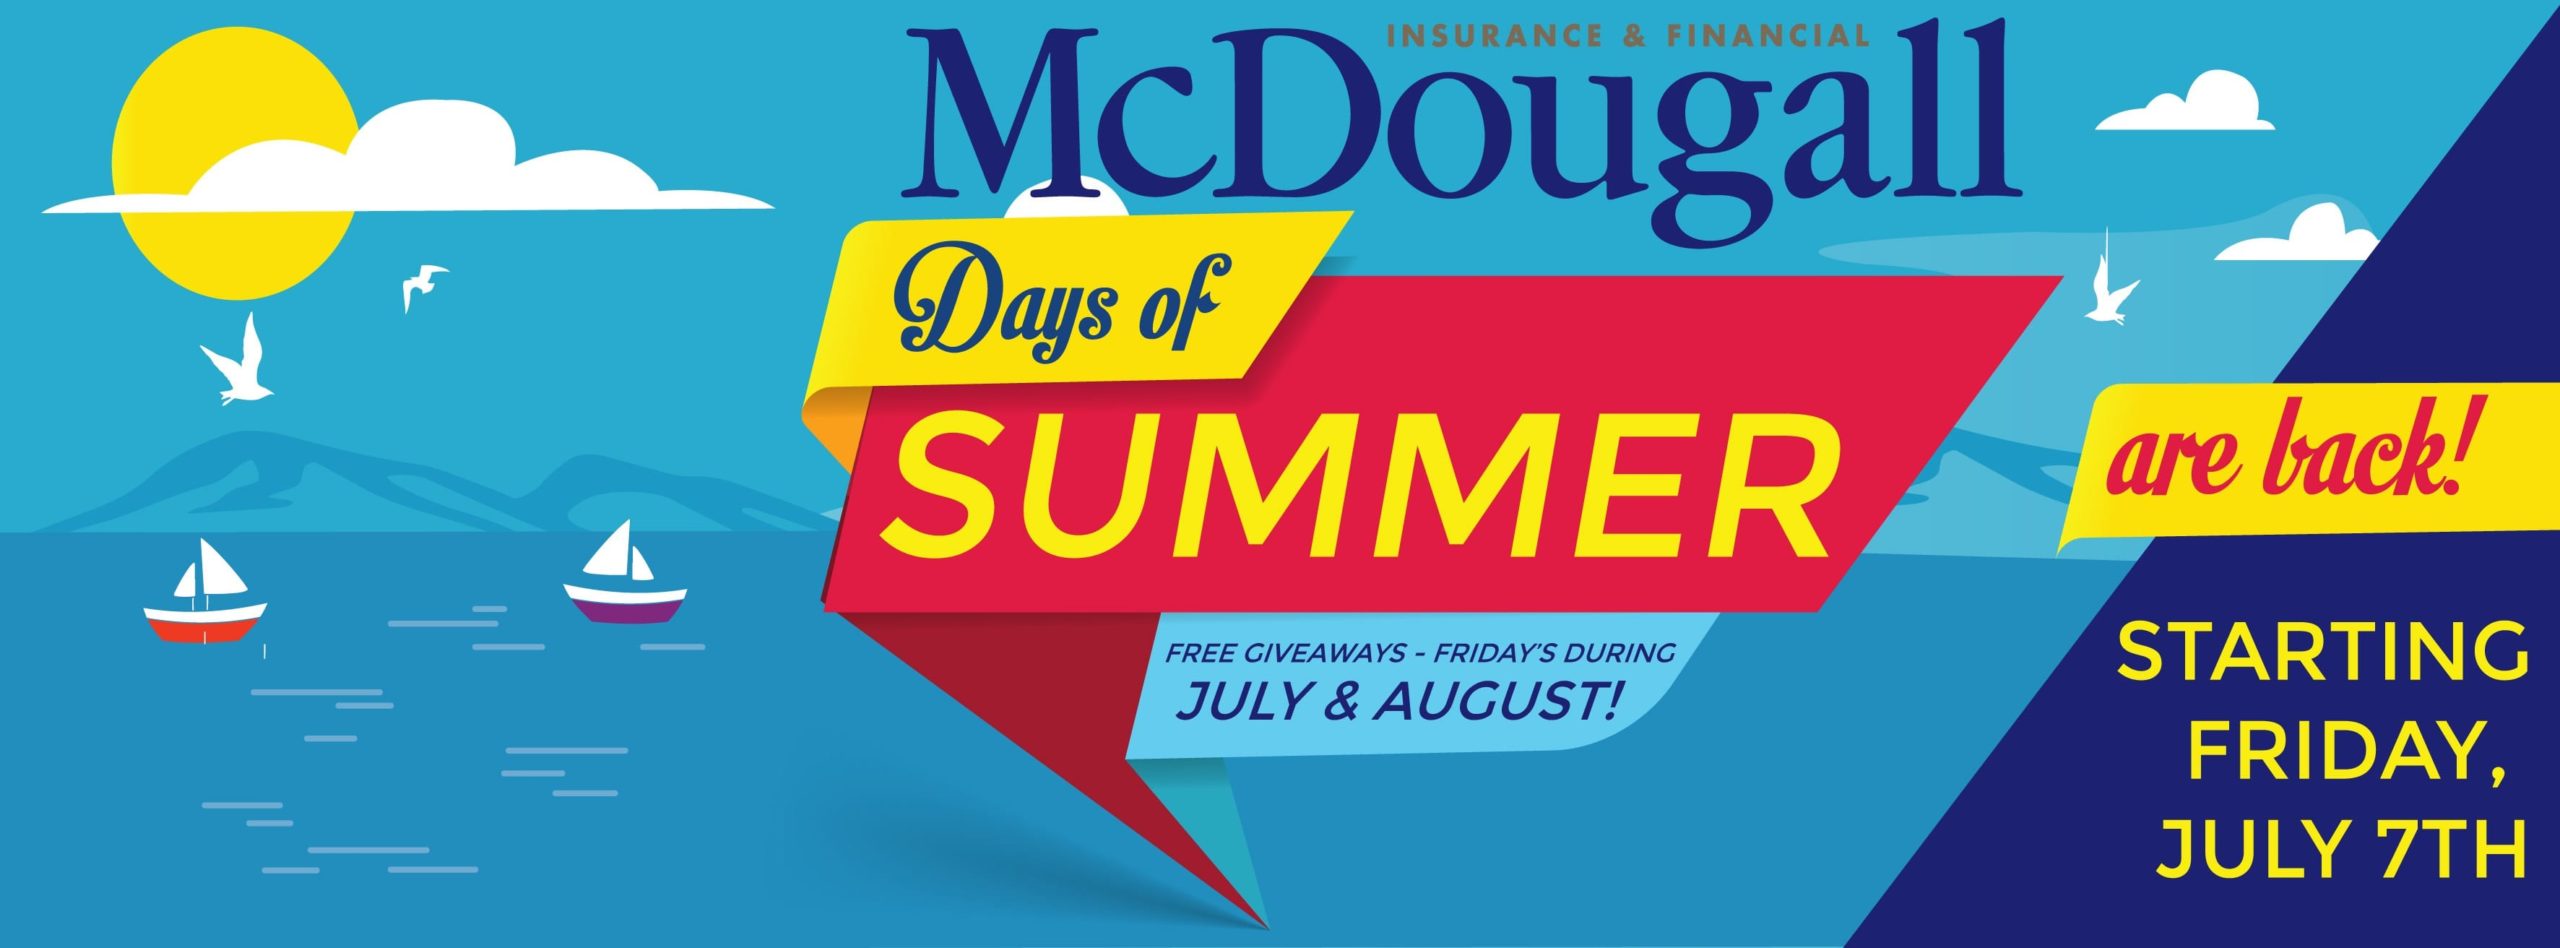 McDougall Days of Summer banner